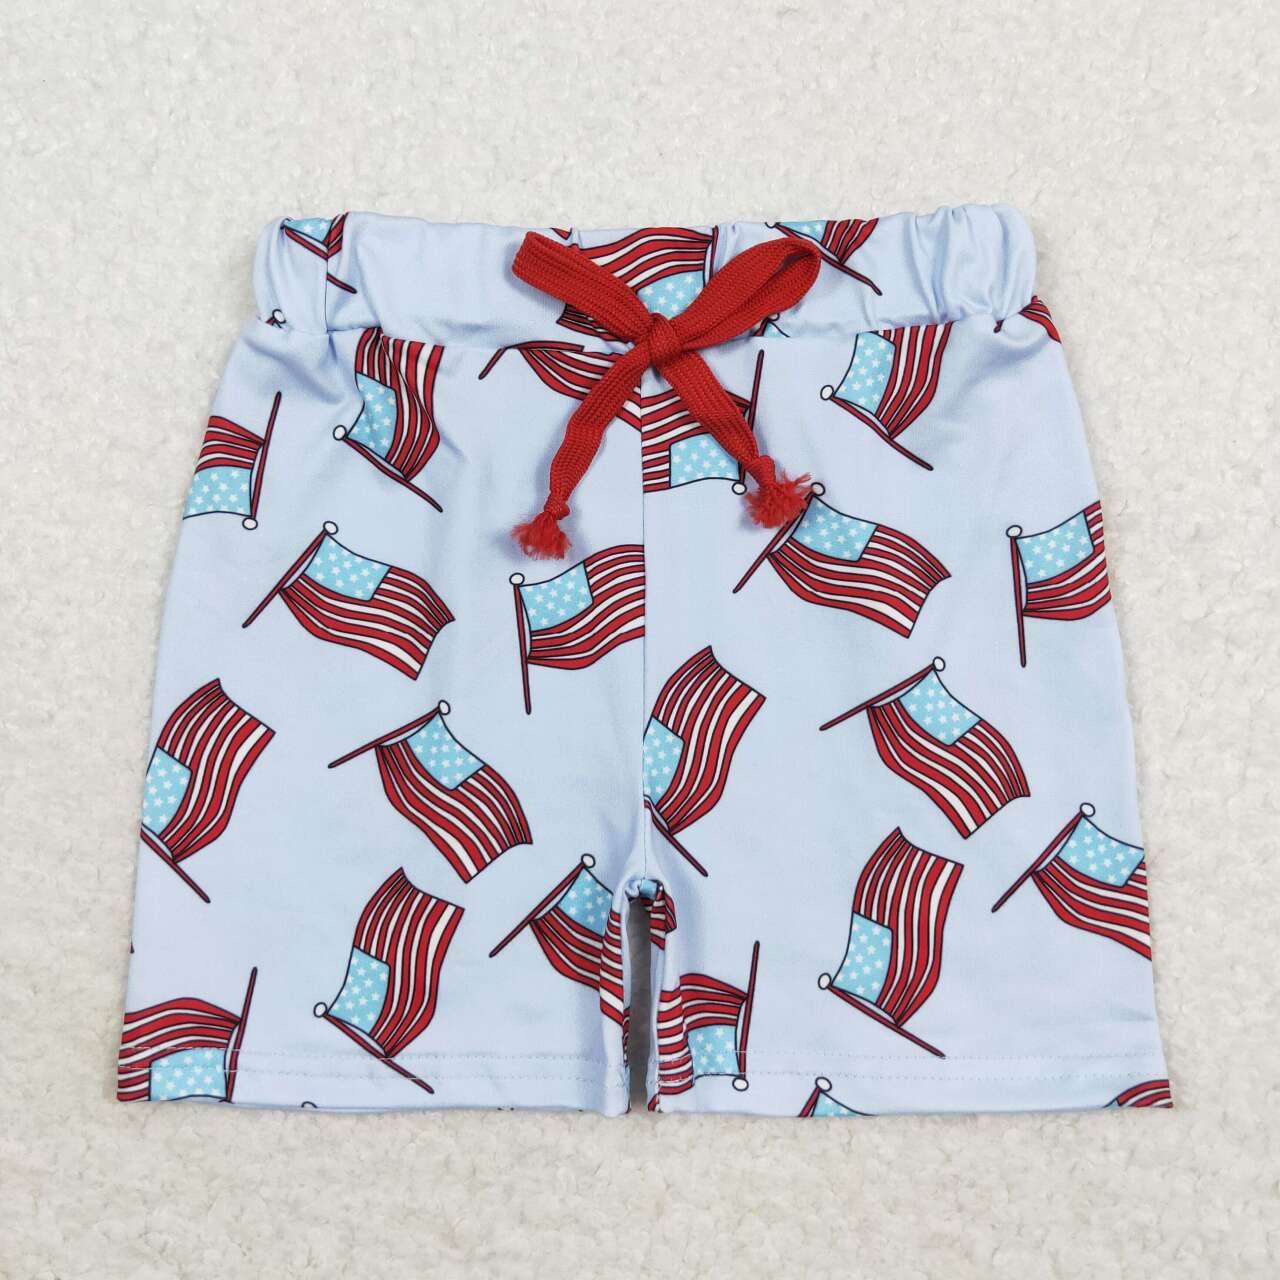 SS0174 Flag pattern white shorts for kids